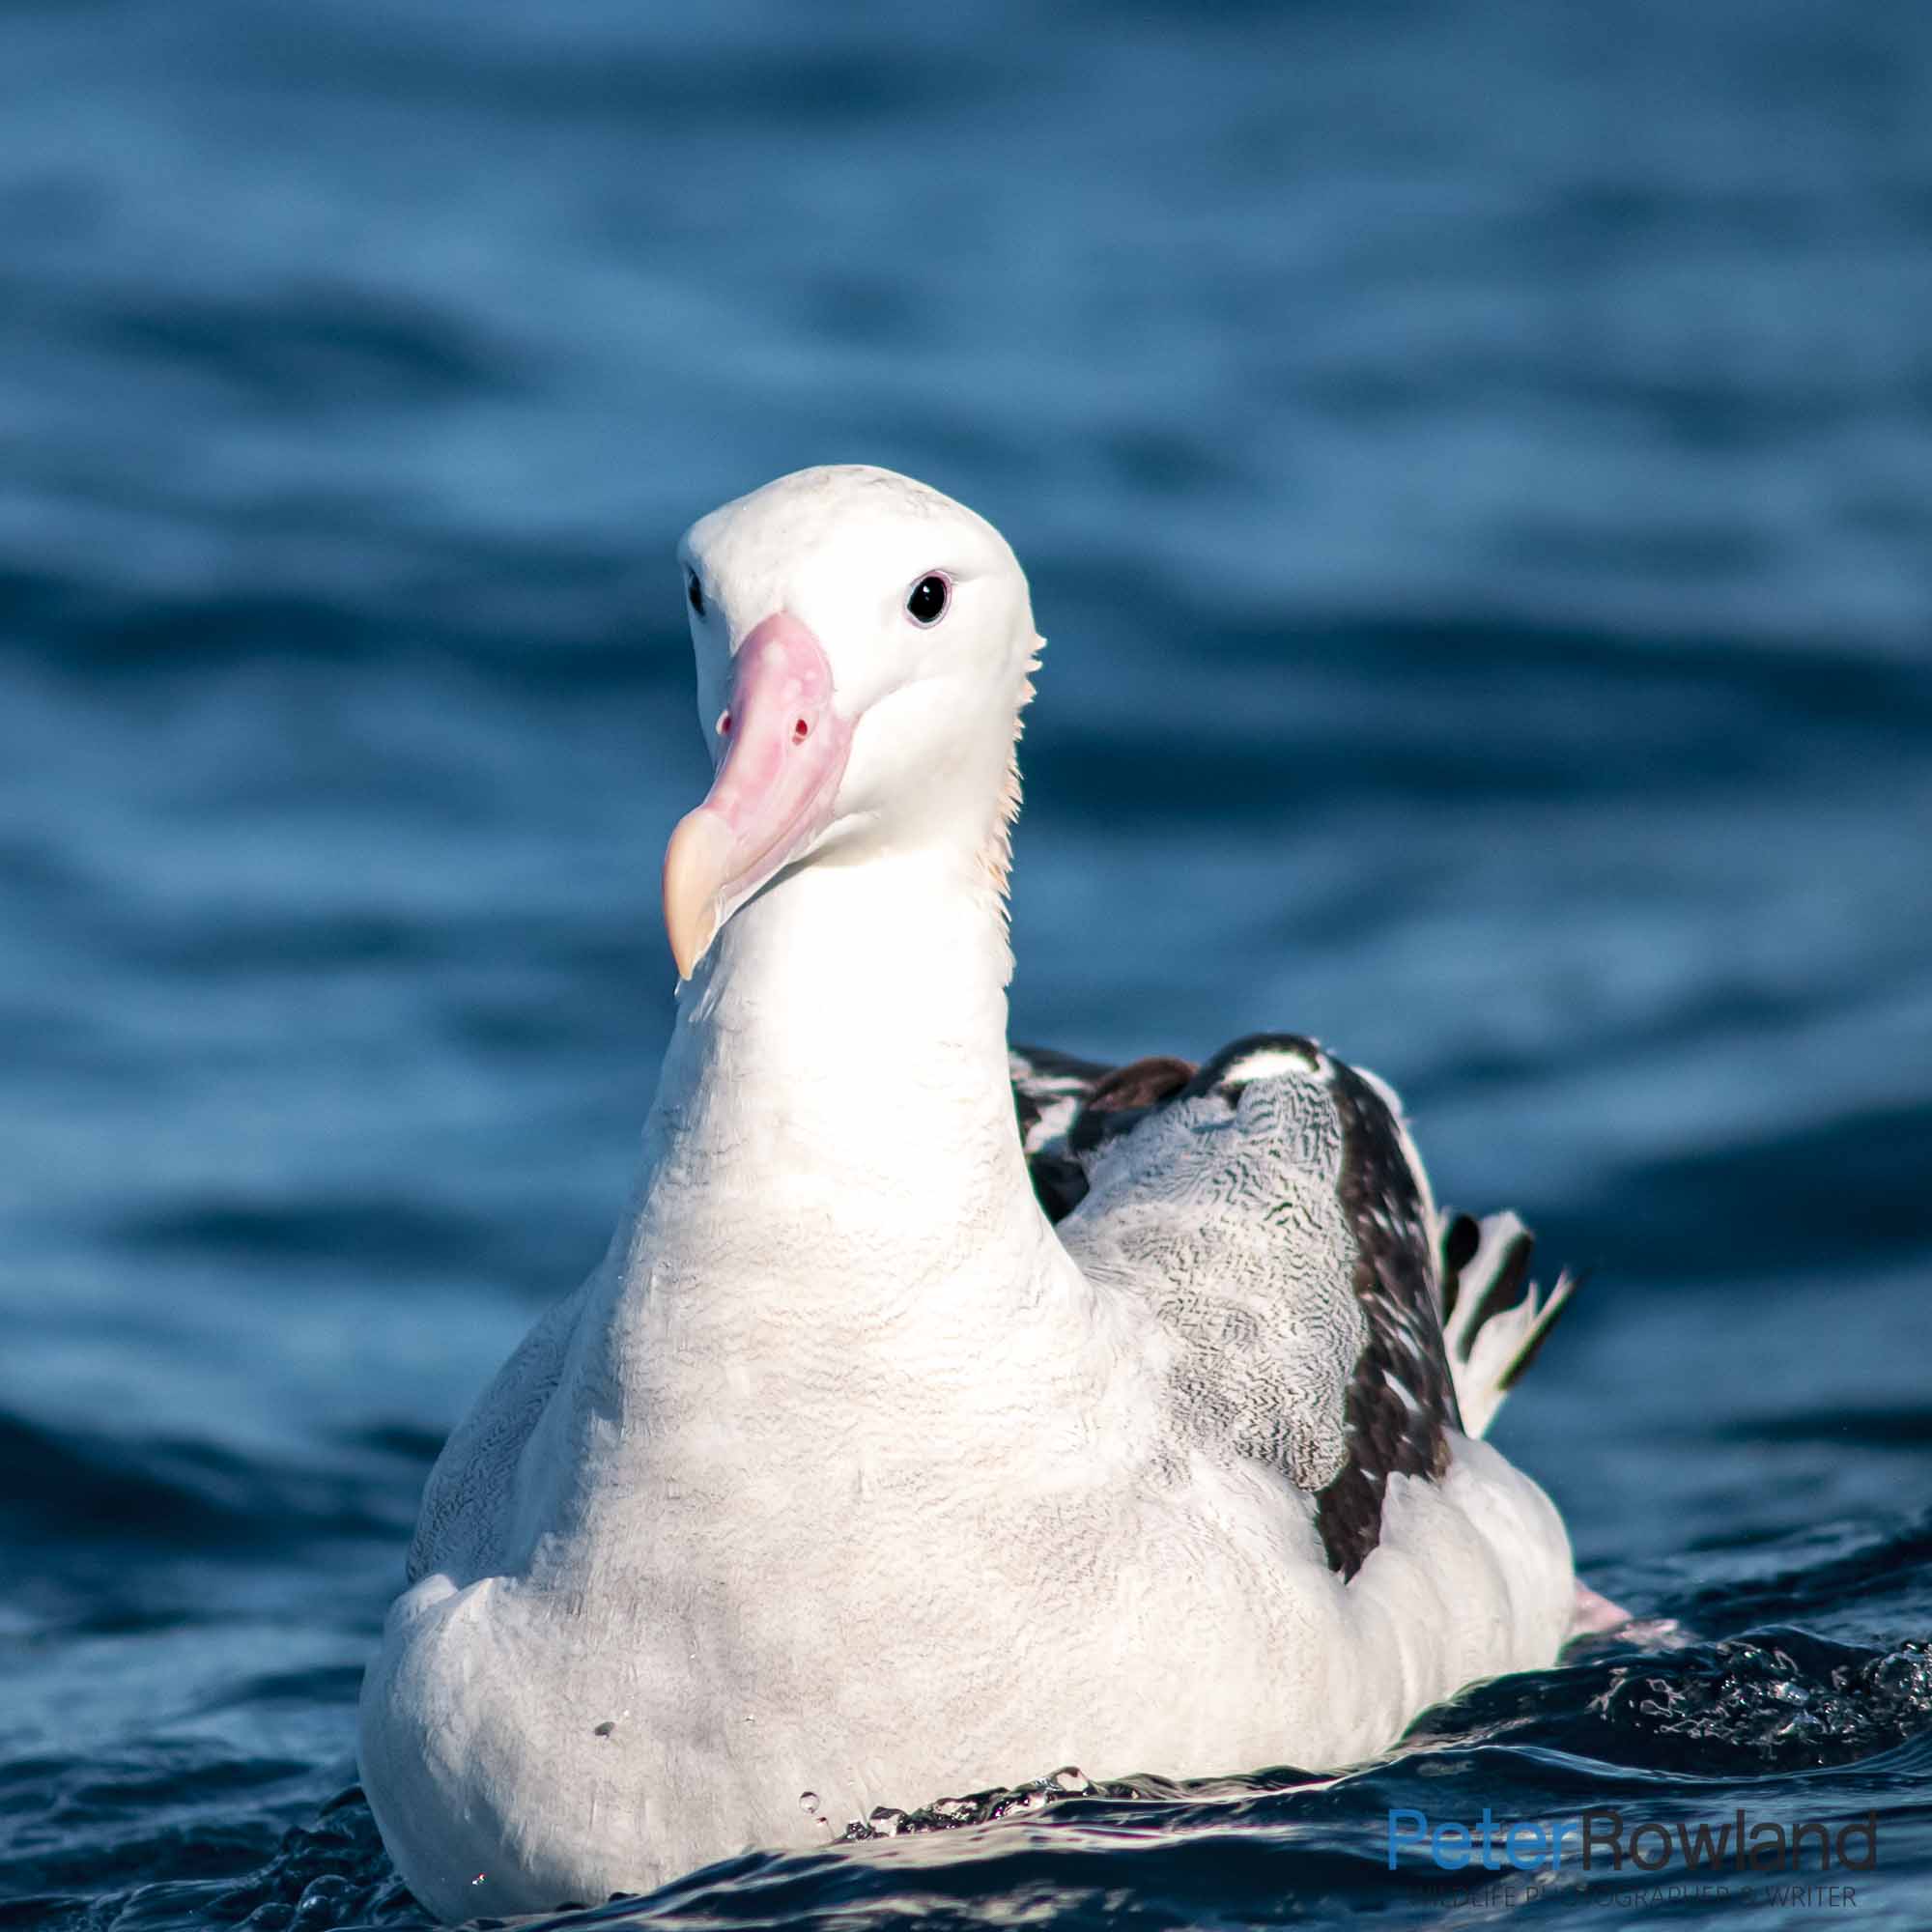 A Wandering Albatross swimming in open ocean